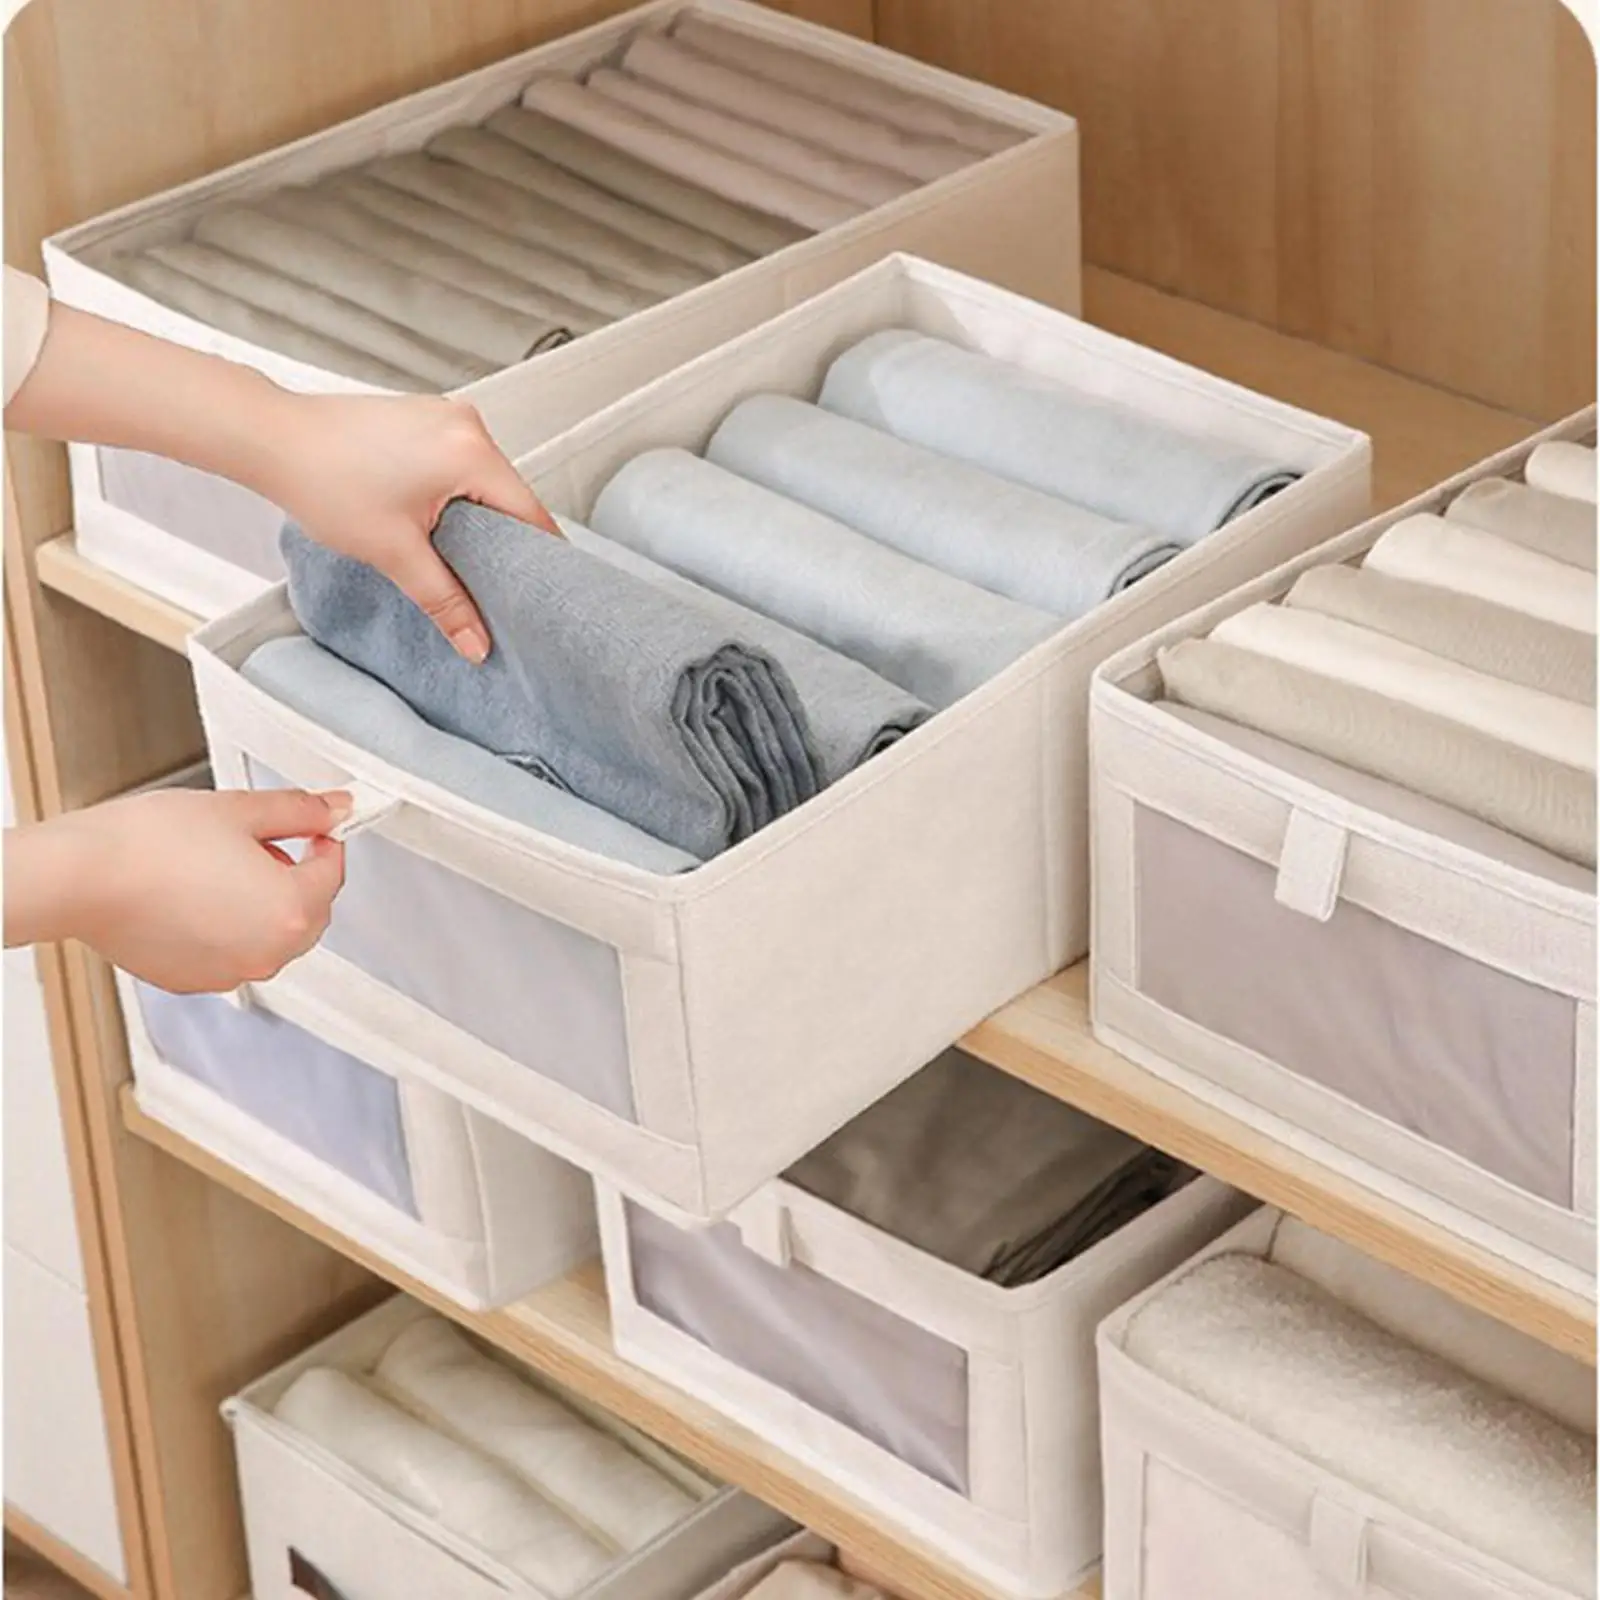 Clothes Organizer Storage Box Storage Basket for Blanket Clothing Clothes